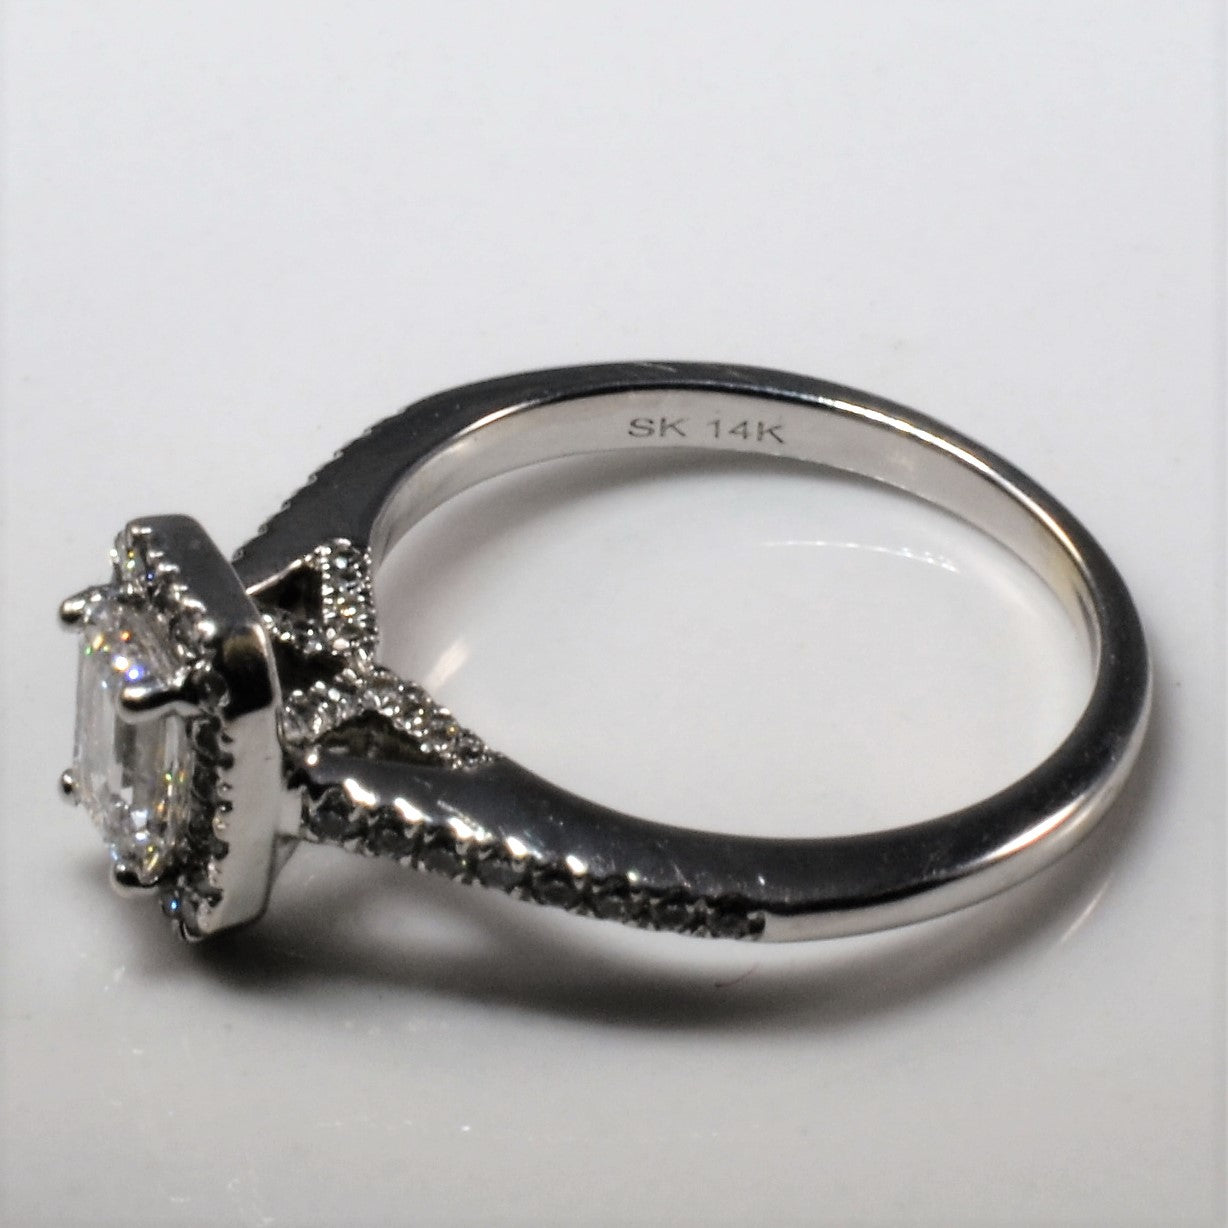 Emerald Cut Halo Diamond Engagement Ring | 0.79ctw | SZ 5 |